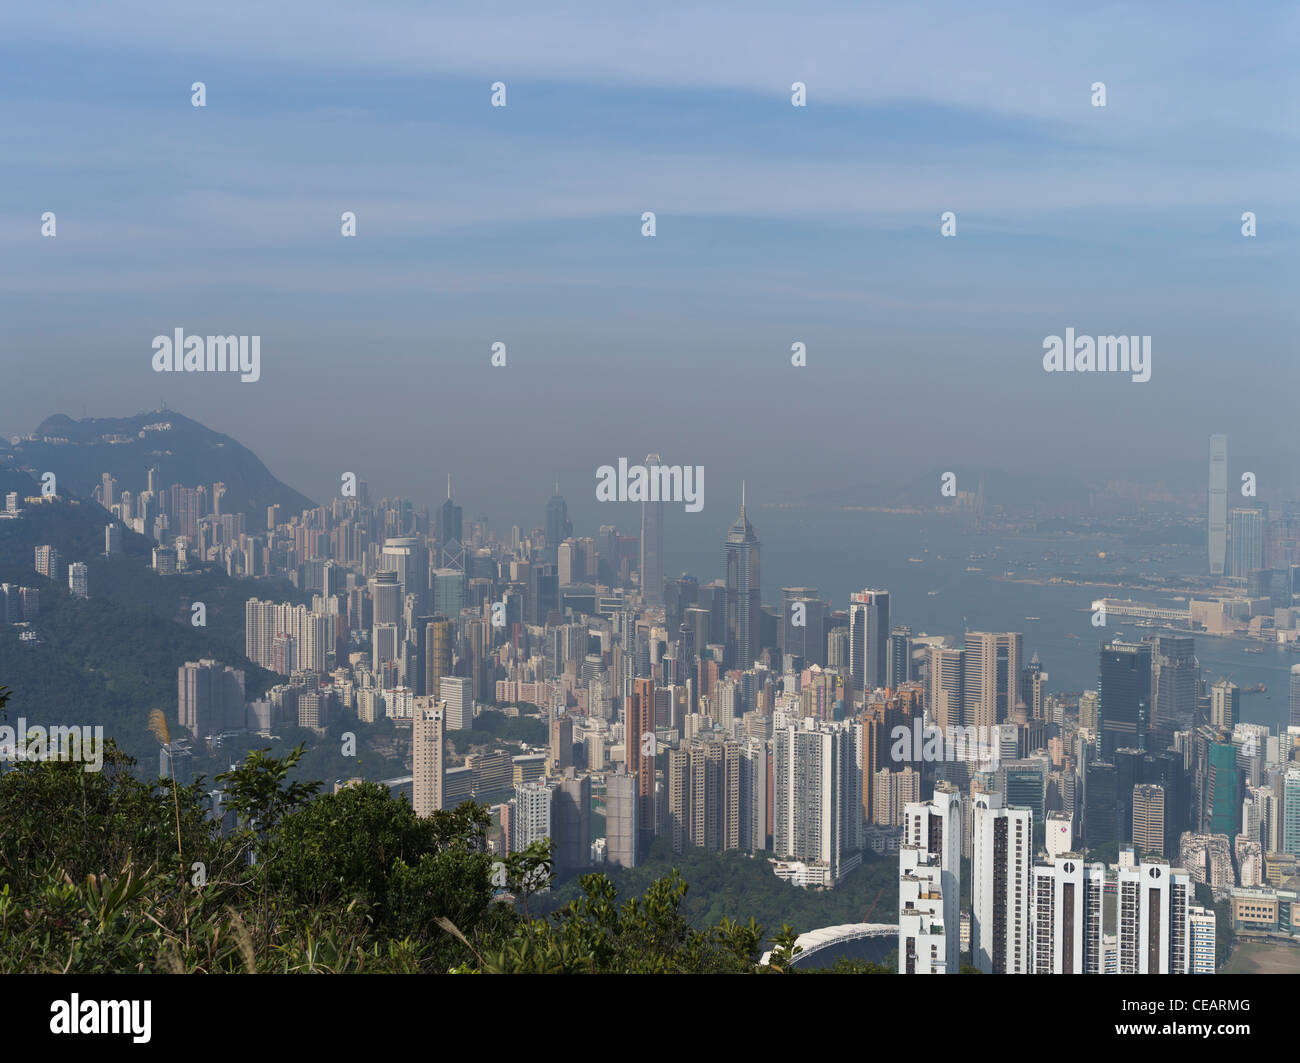 Dh JARDINES LOOKOUT HONG KONG vista di Hong Kong Island Harbour smog inquinamento aria inquinata inquinamento cina Foto Stock